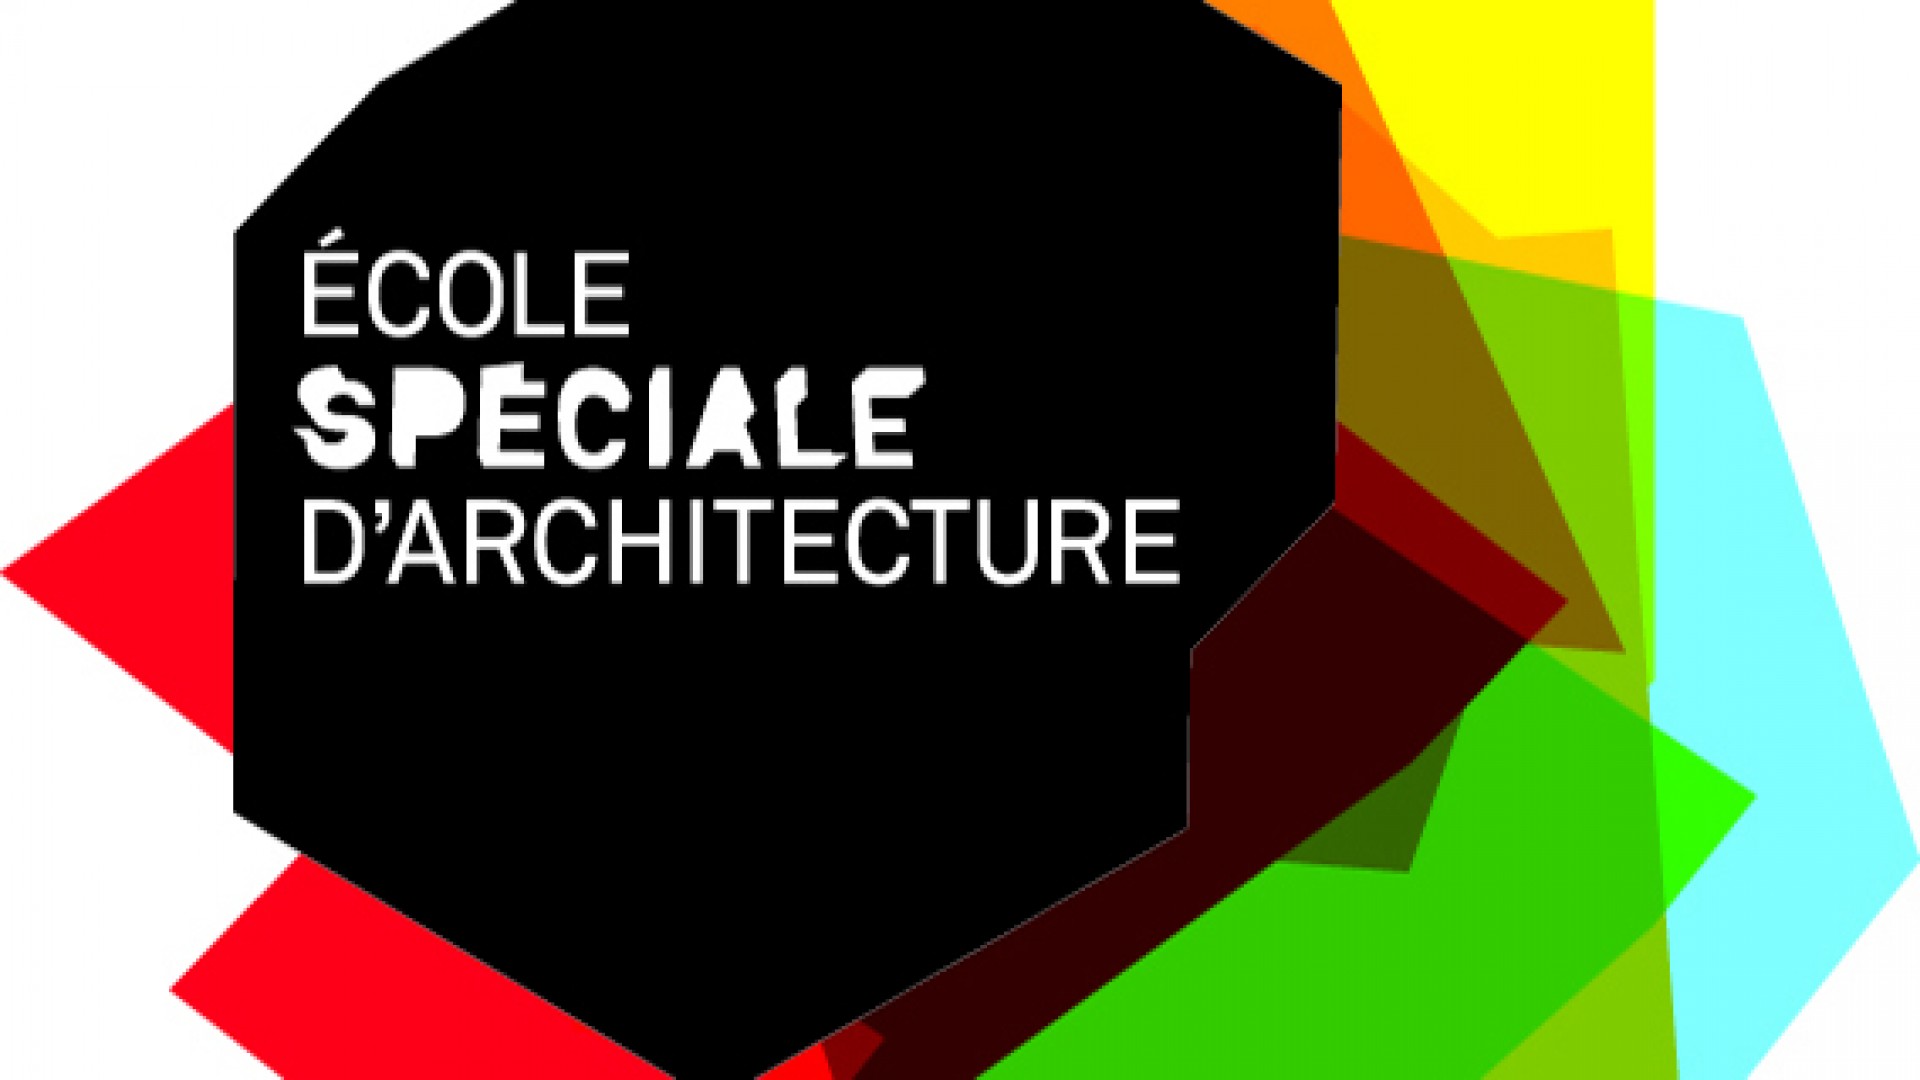 Student exhibition from the Ecole Spéciale d'Architecture architecture school